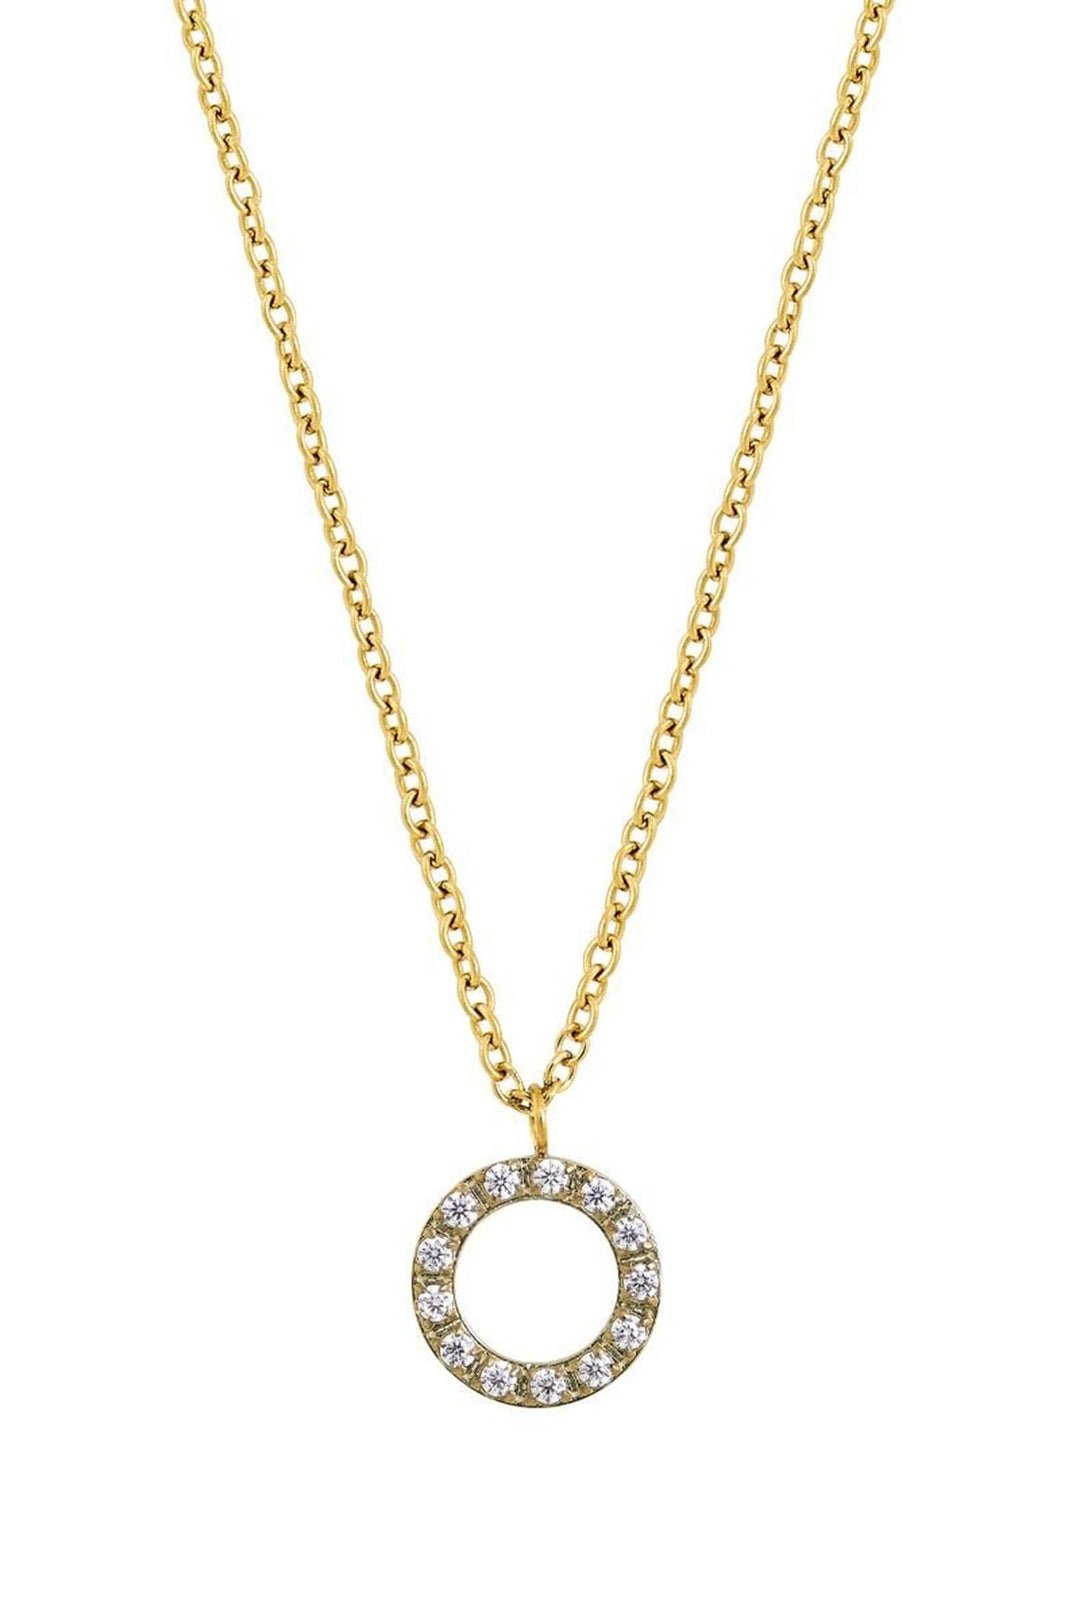 Edblad 120409 Glow Mini Gold Necklace - Olivia Grace Fashion